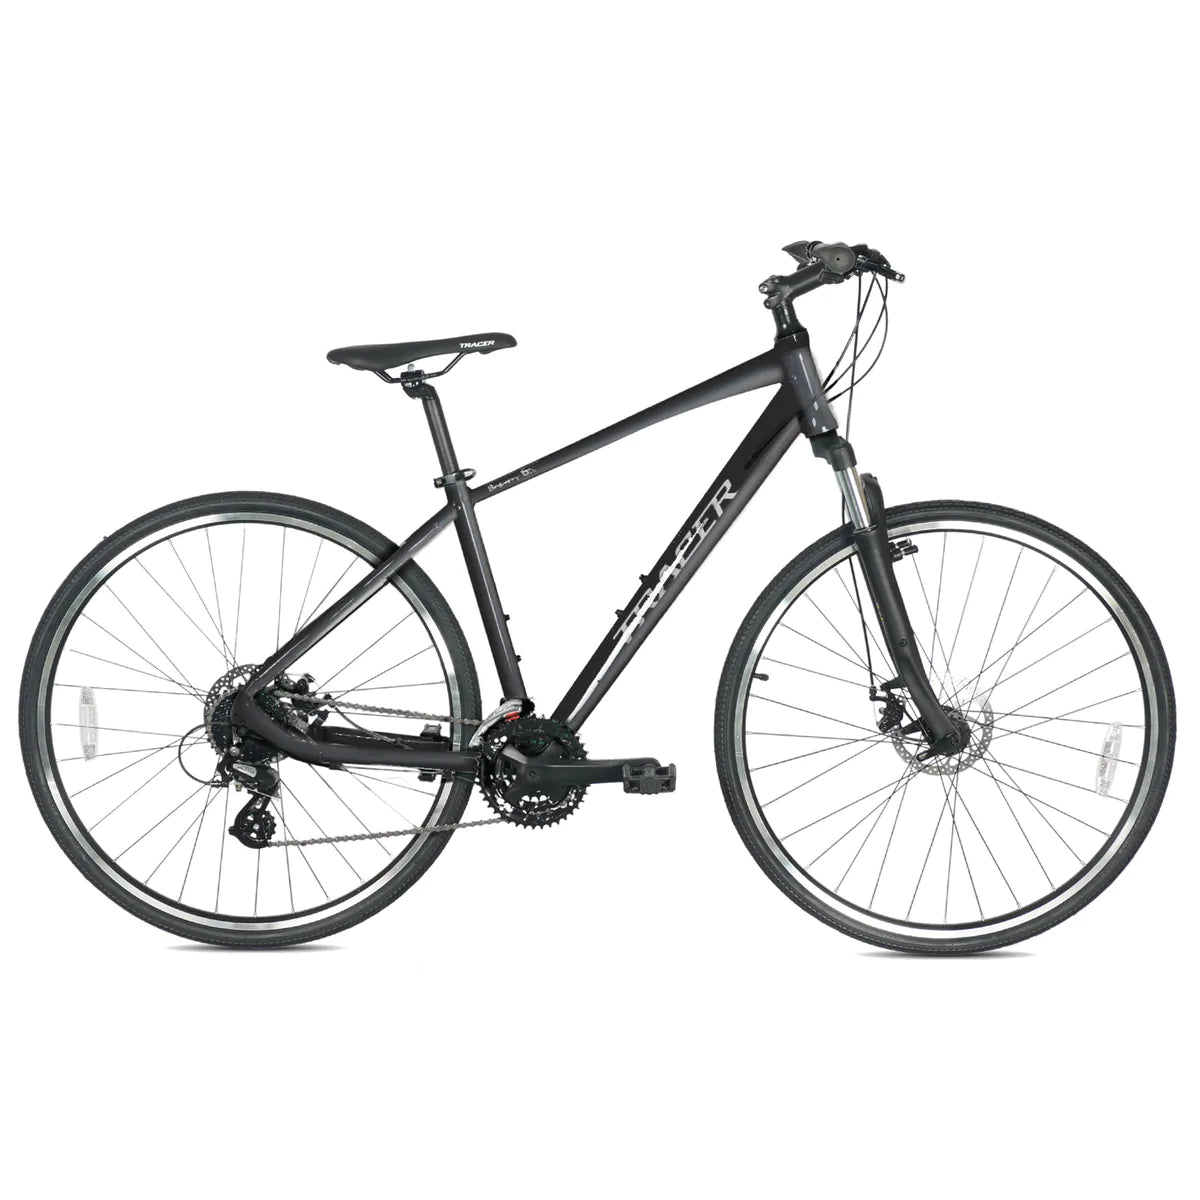 Tracer Bravery DX Hybrid City Bike - Matte Gray | City Bike | Road Bike | Bike Lover USA